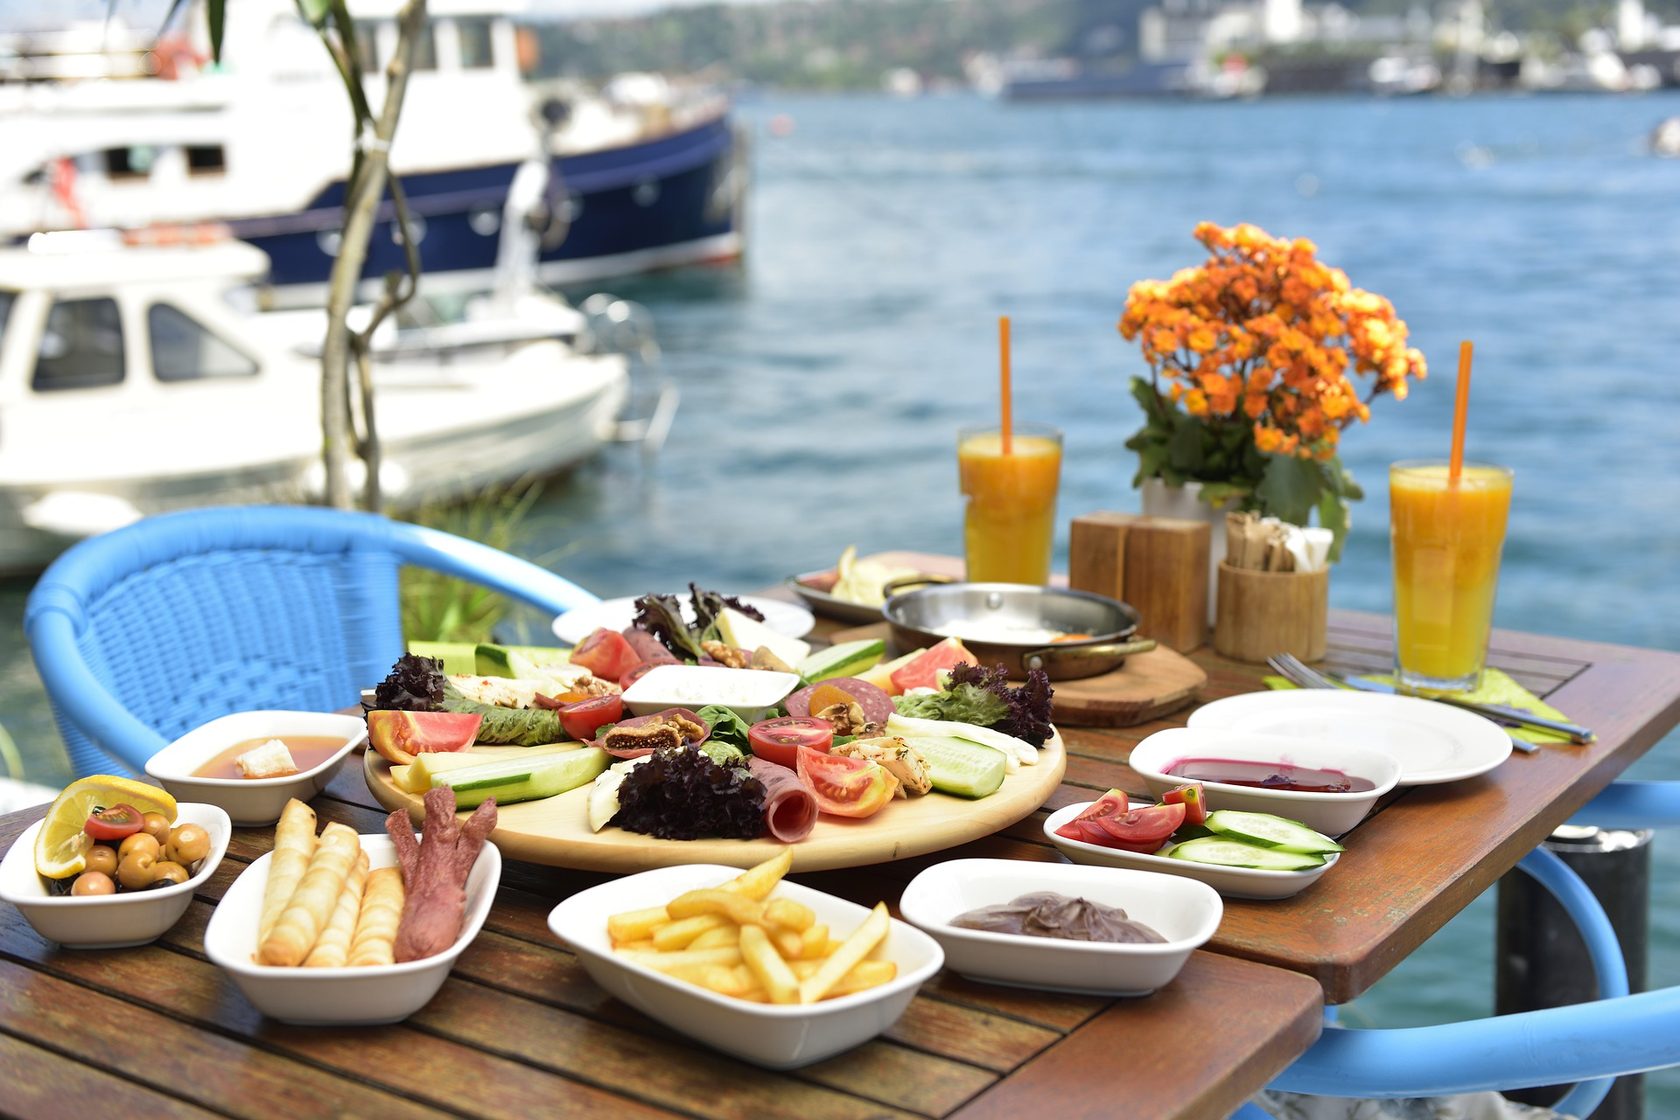 Завтрак в стамбуле недорого. КАХВАЛТИ турецкий завтрак. Турецкий завтрак в Стамбуле. Турецкий завтрак Босфор. Завтрак у моря.